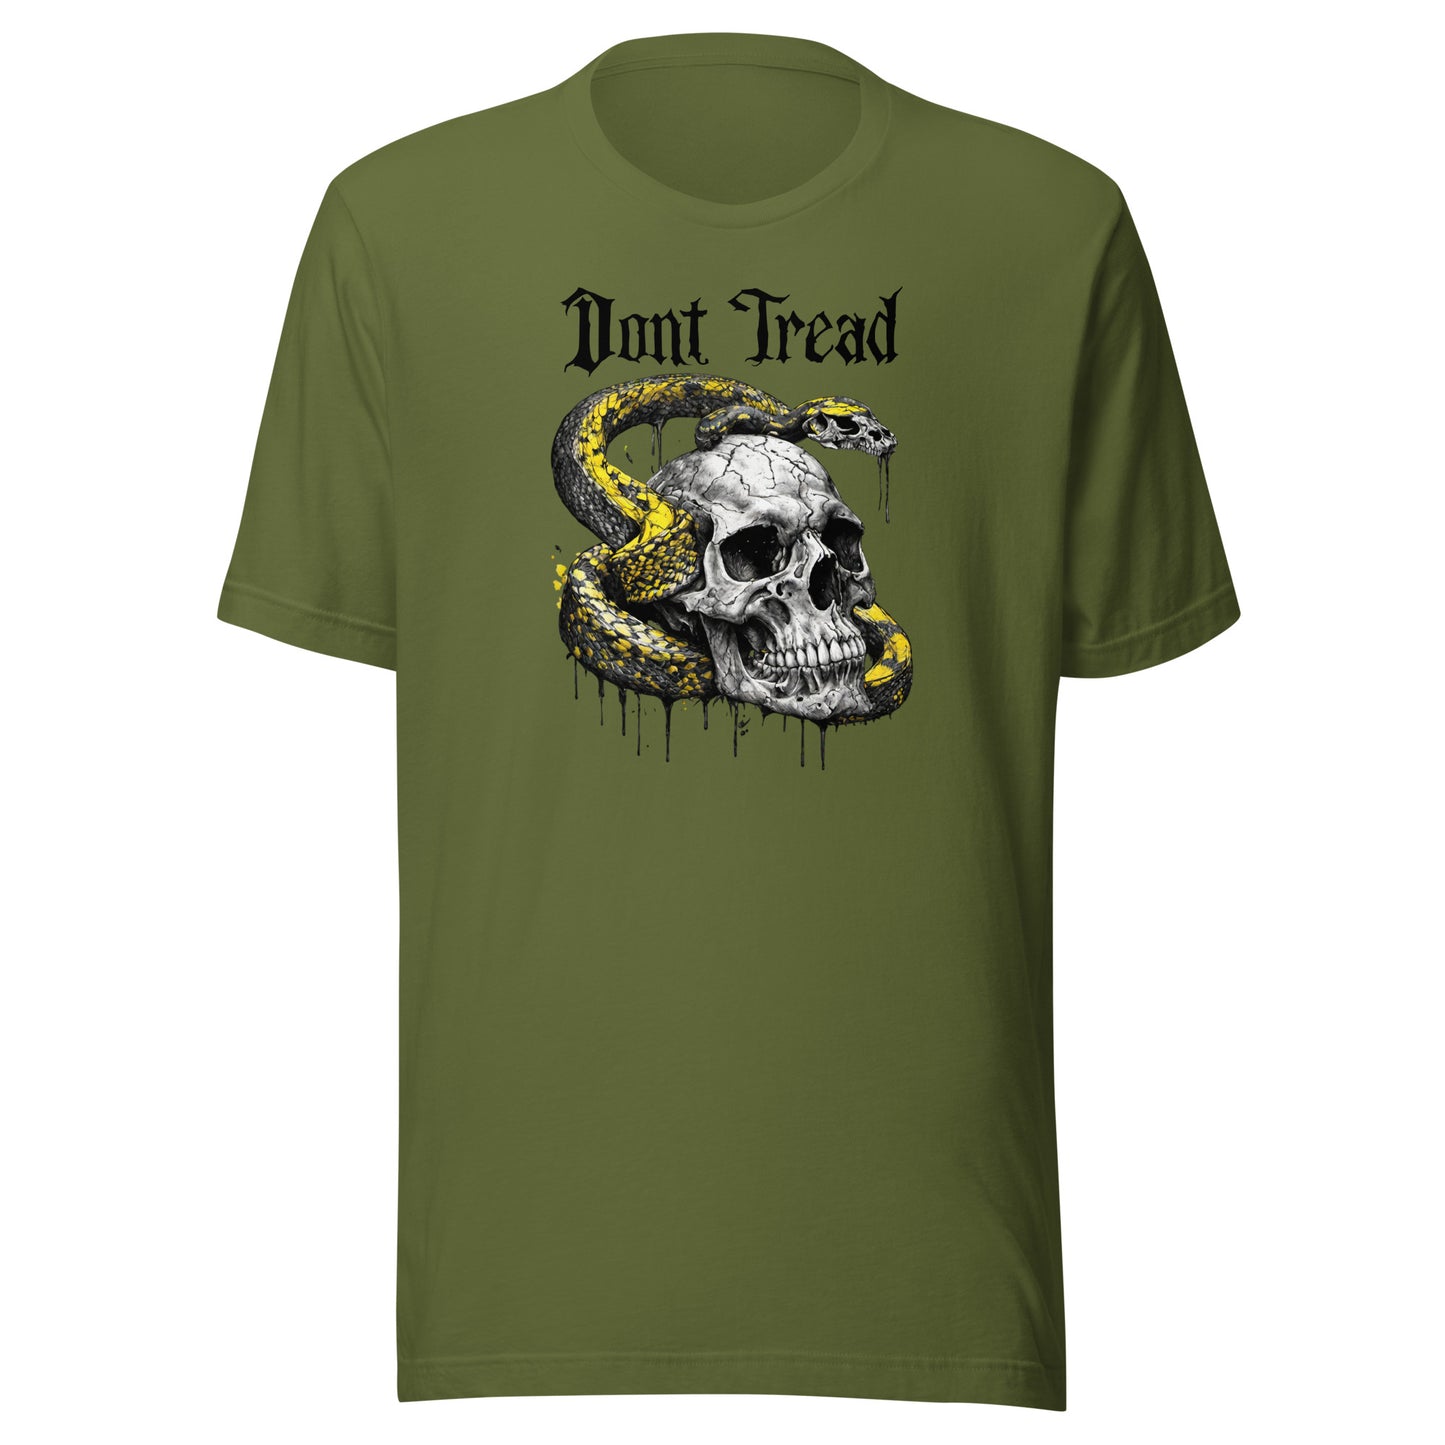 Don't Tread Snake & Skull 2nd Amendment Men's T-Shirt Olive